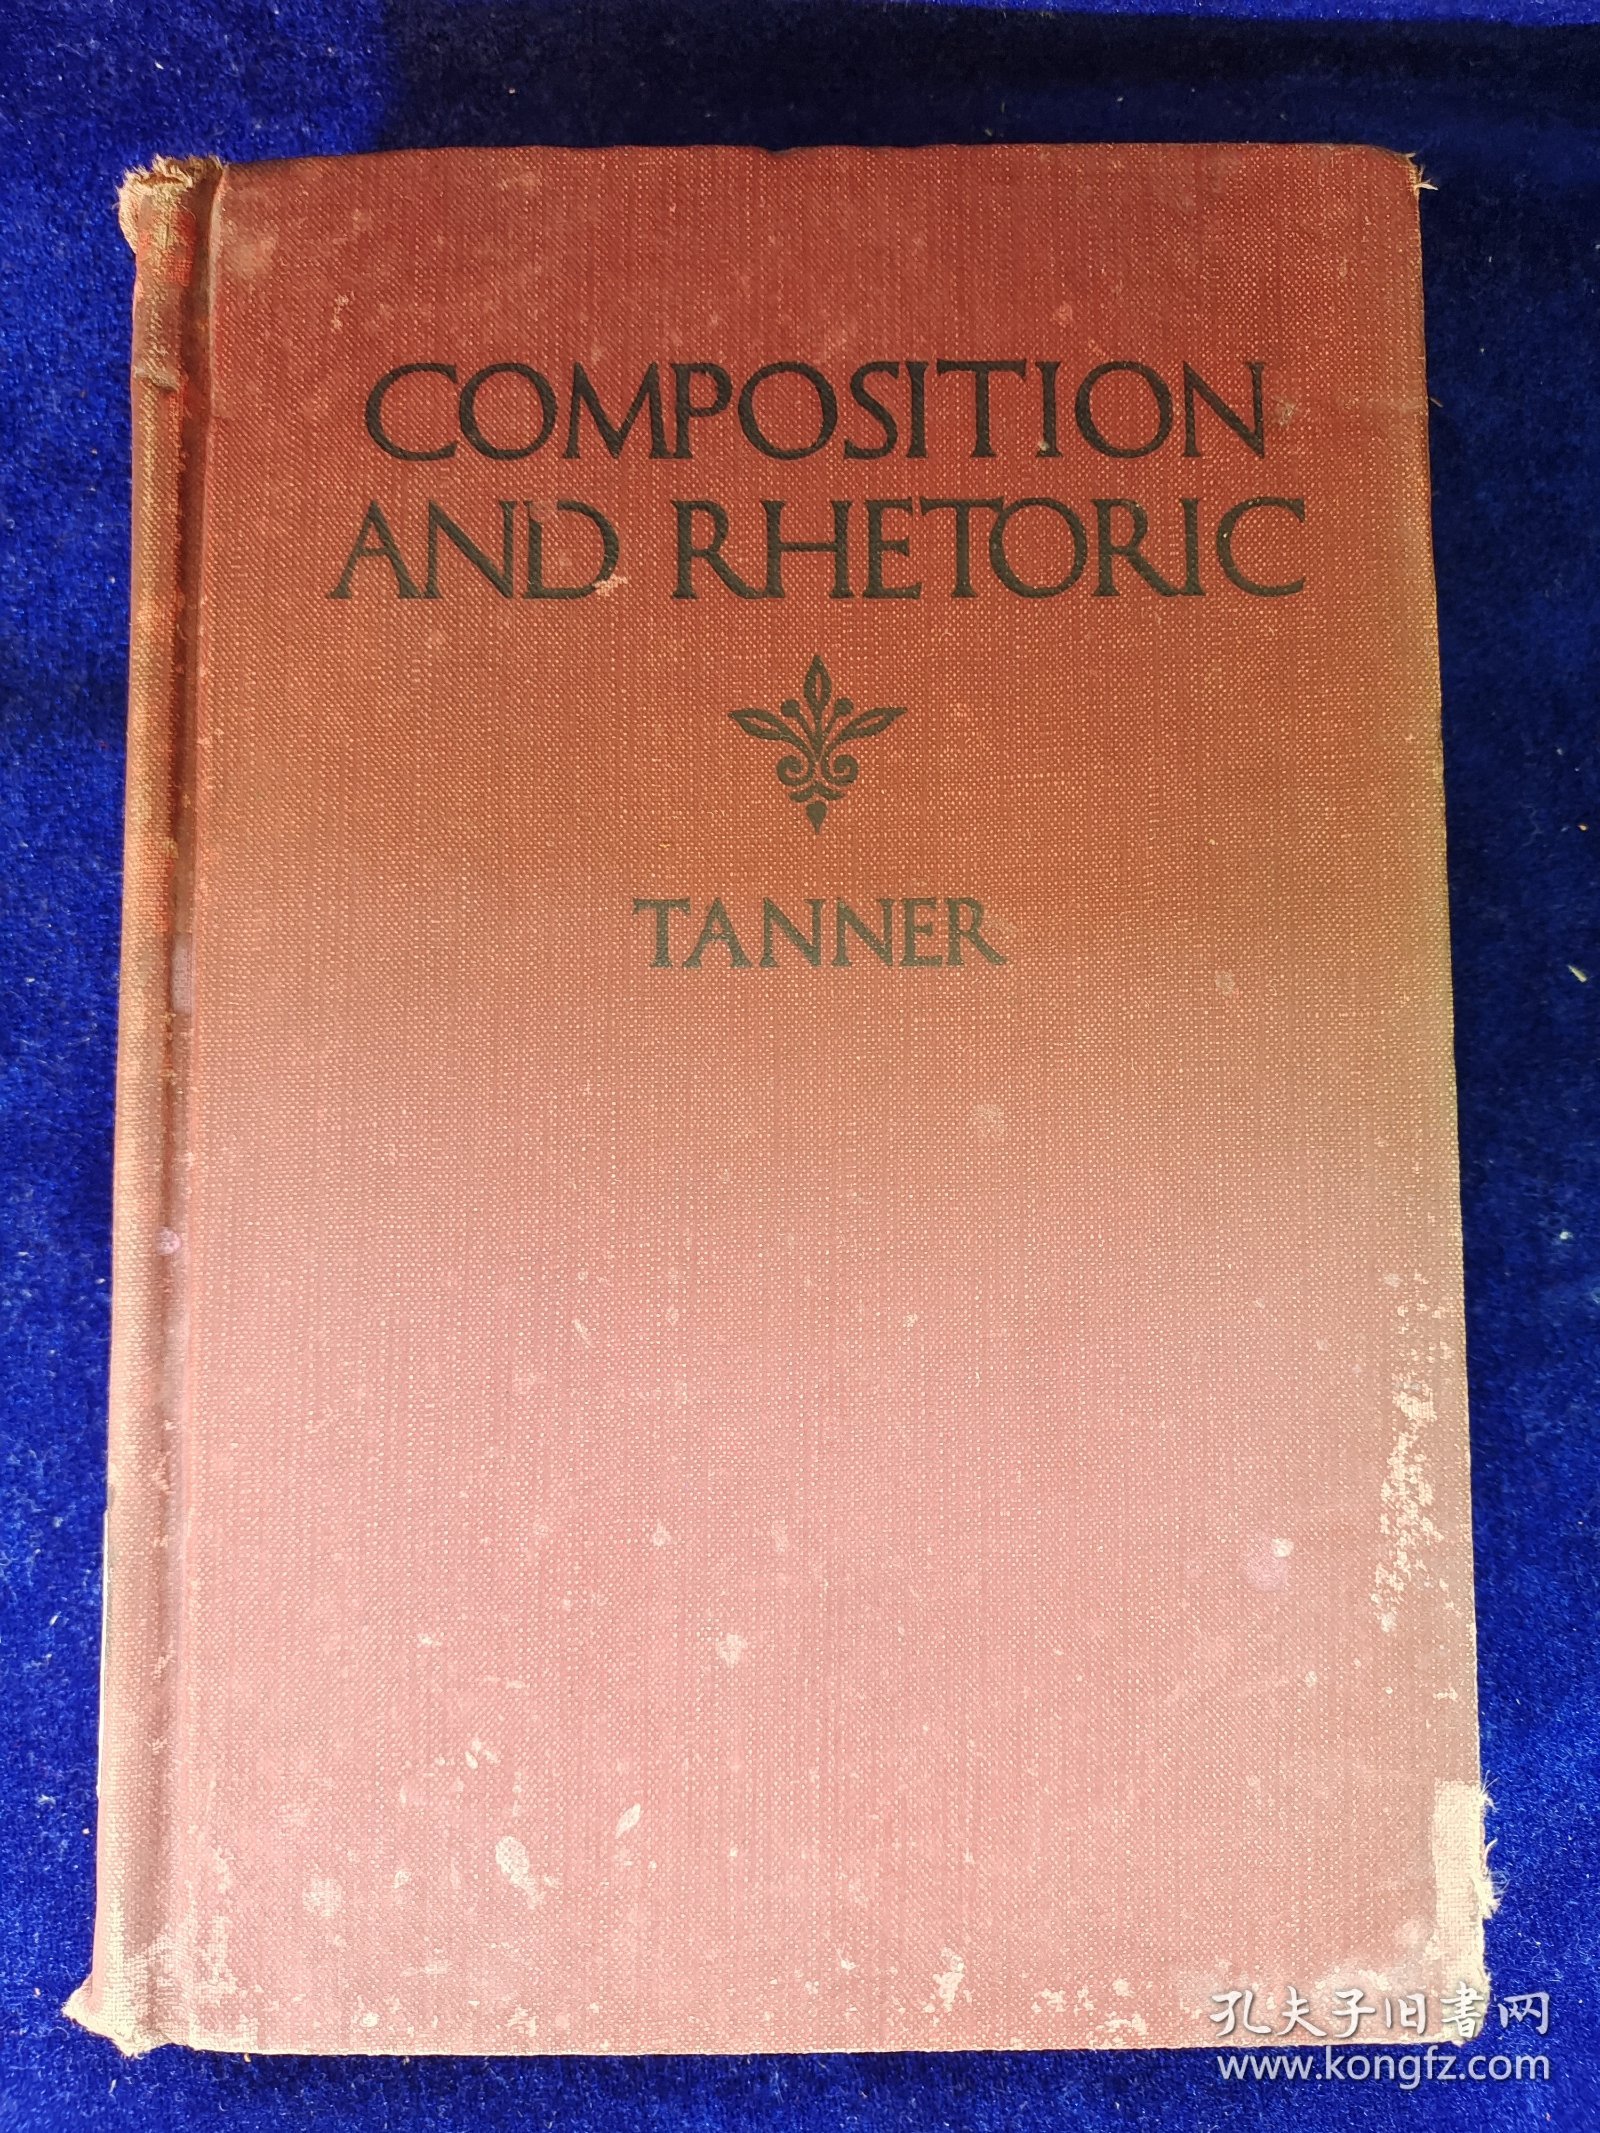 COMPOSITION AND RHETORIC（馆藏）精装 32开 1922年版